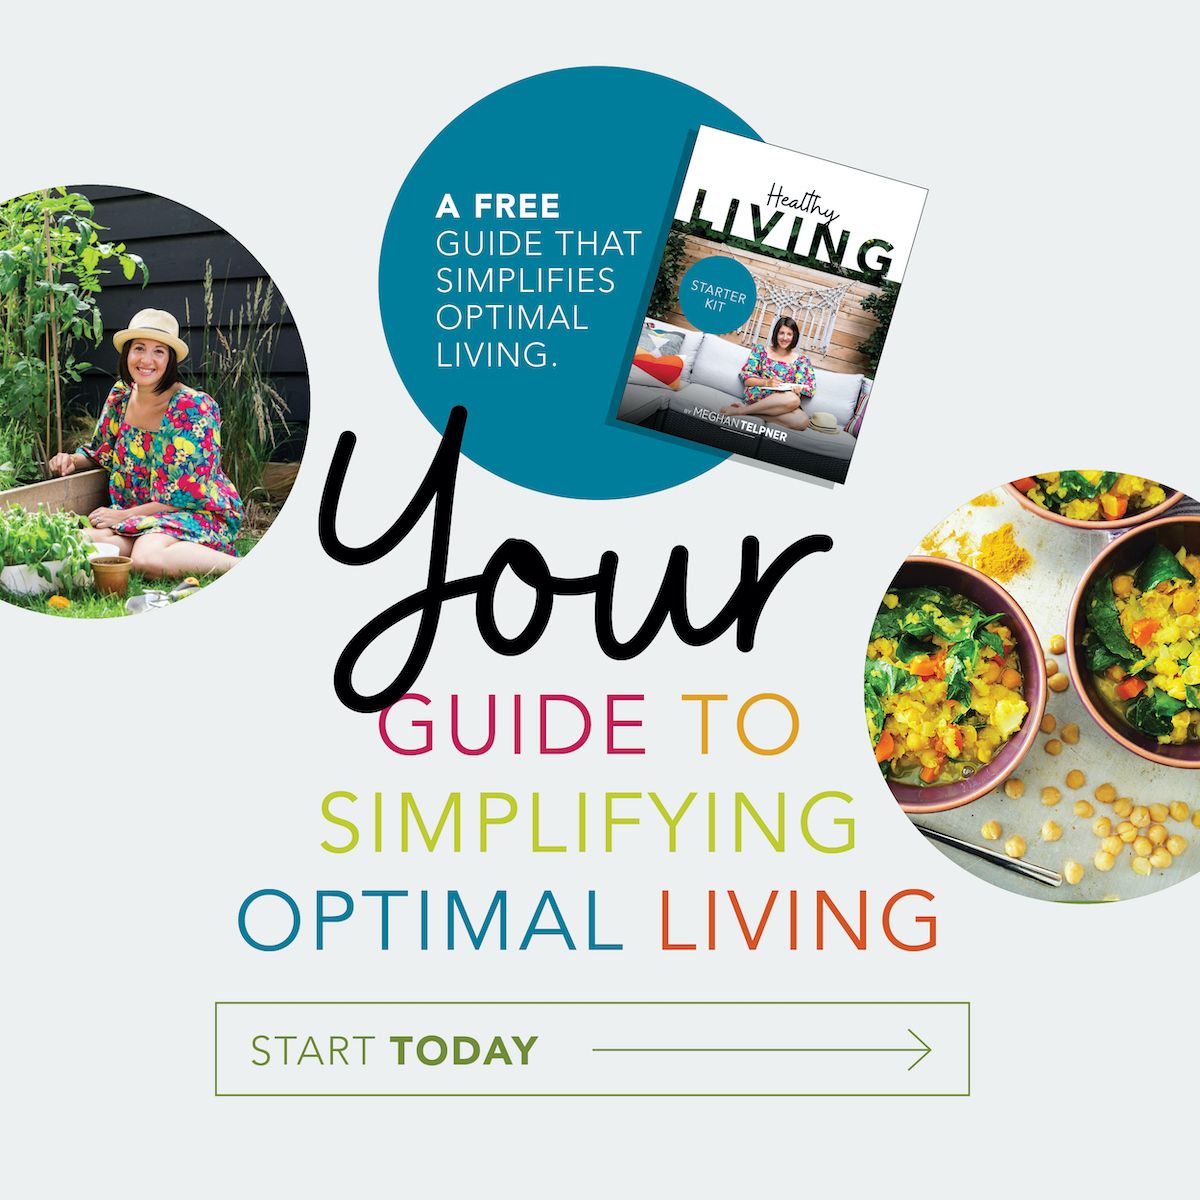 Healthy Living Starter Kit image for shop page